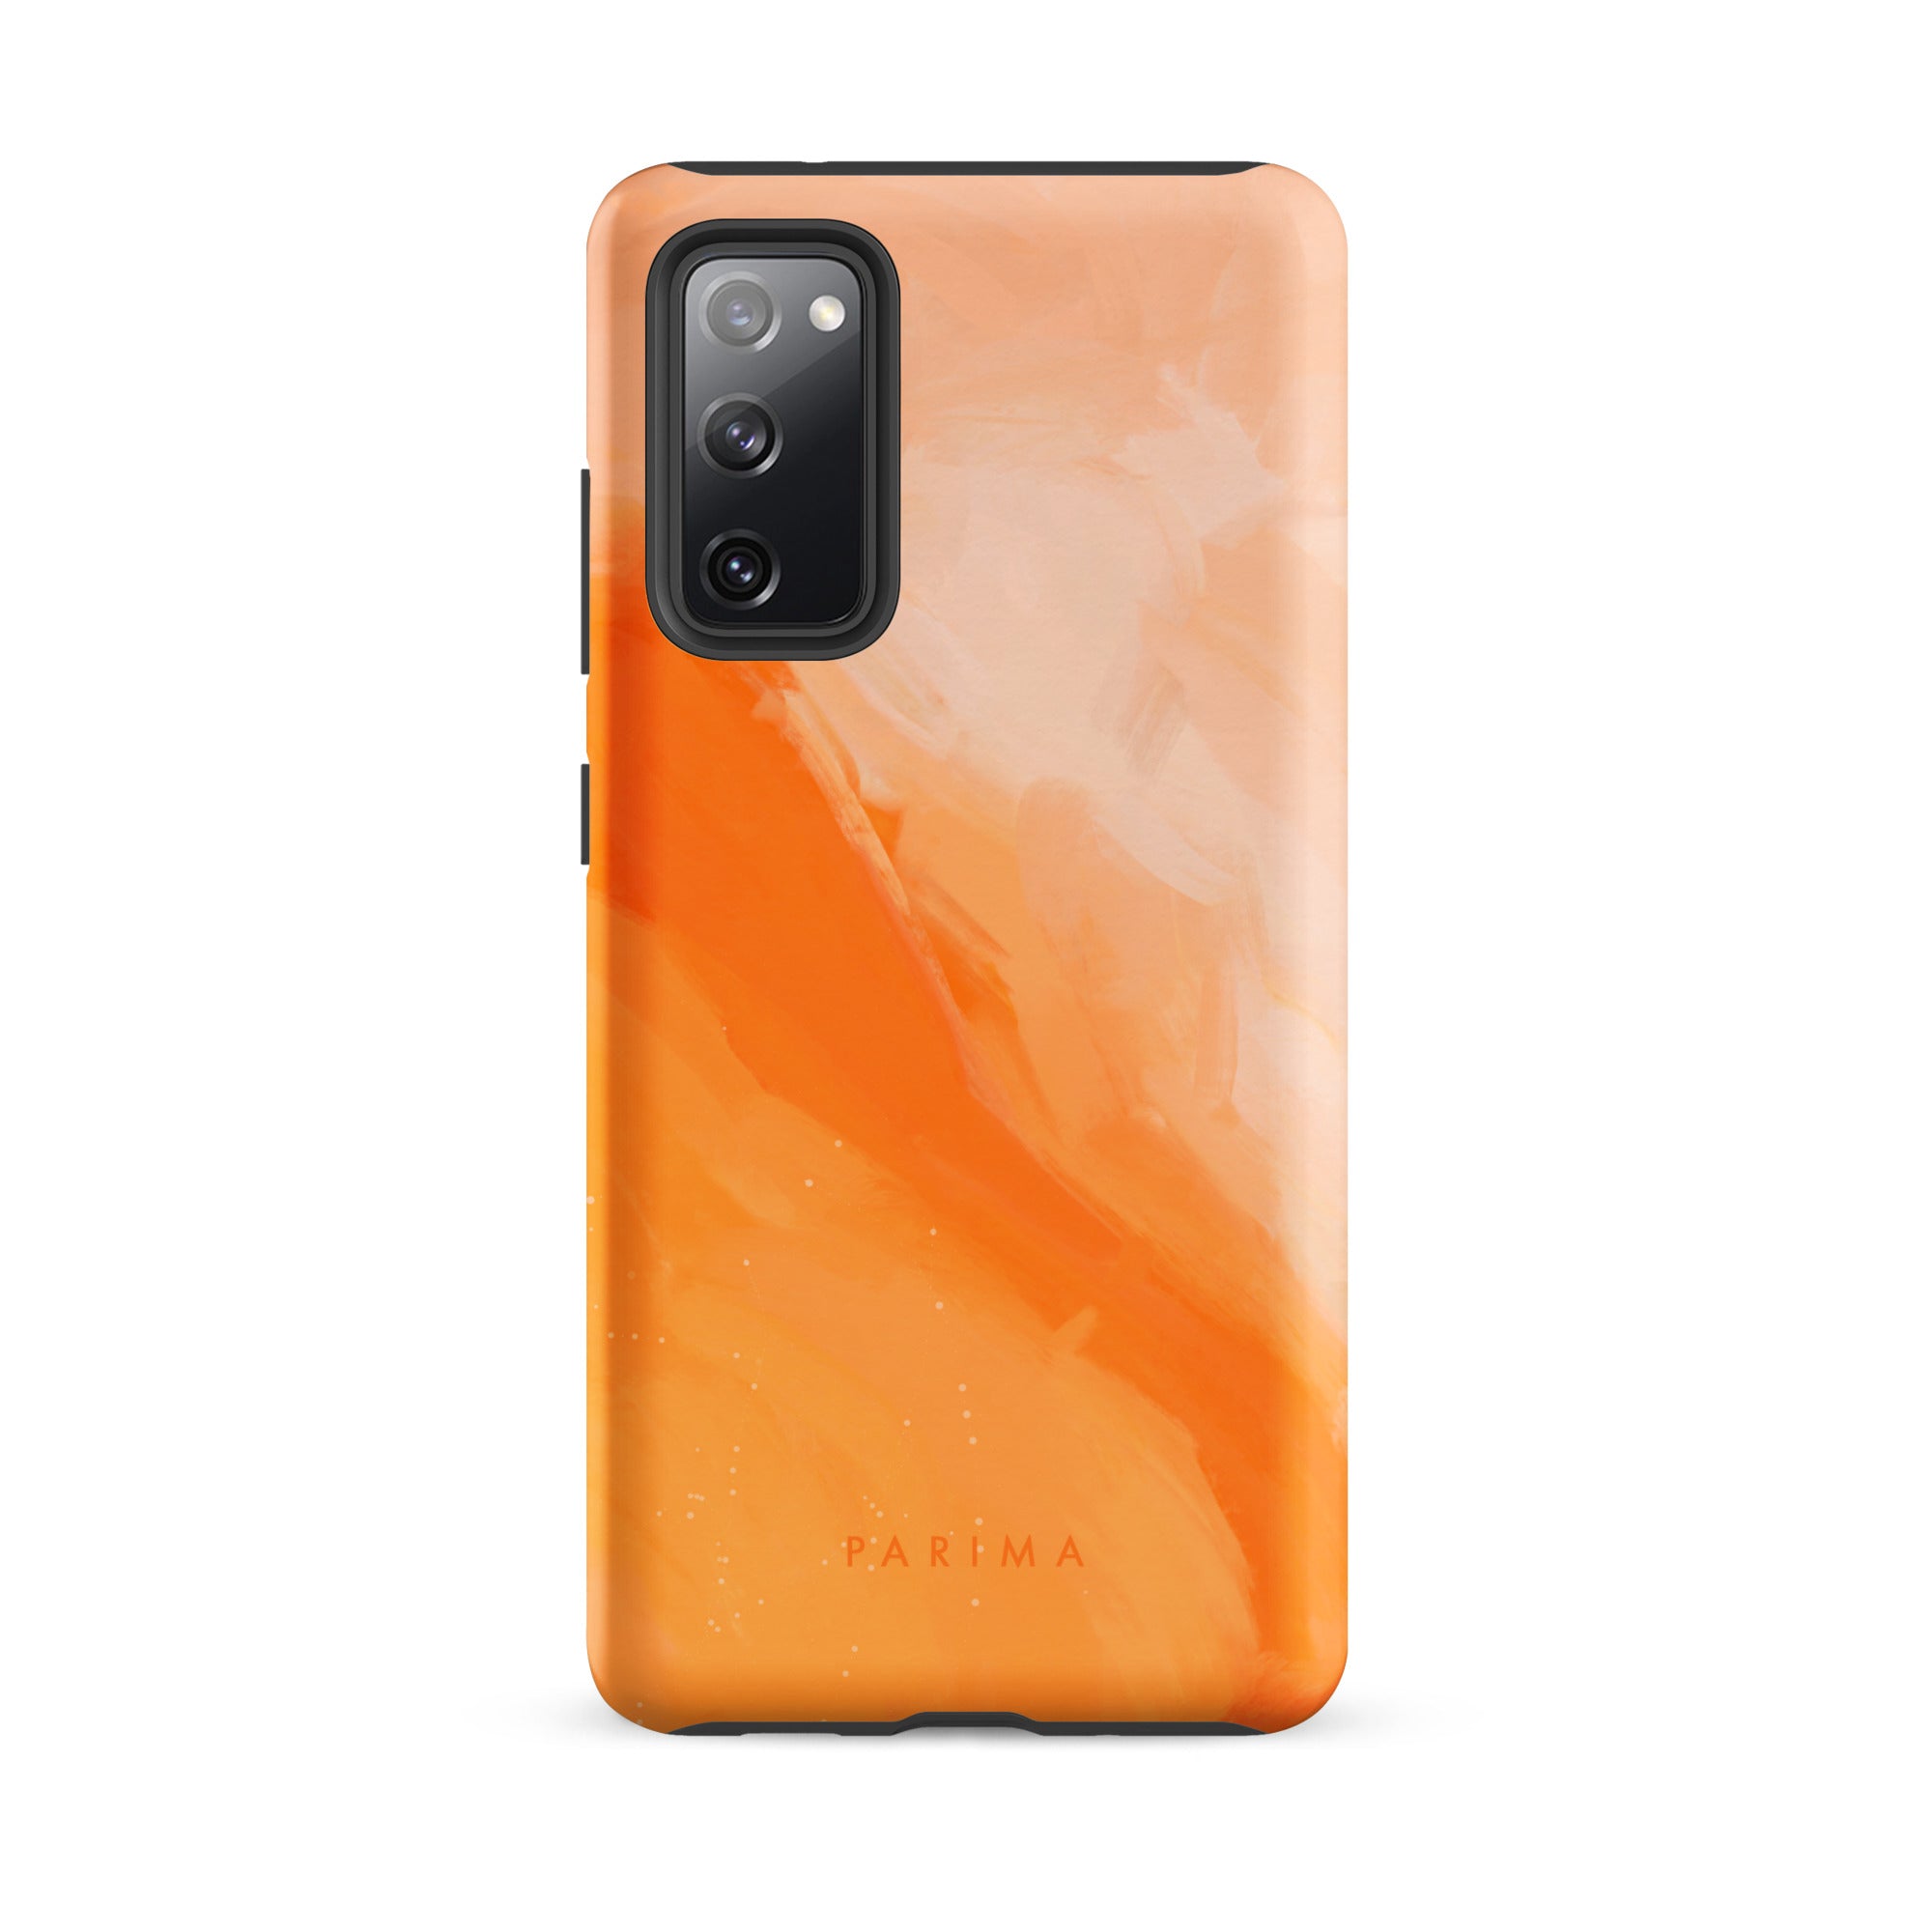 Sweet Orange, orange and pink abstract art on Samsung Galaxy S20 FE tough case by Parima Studio